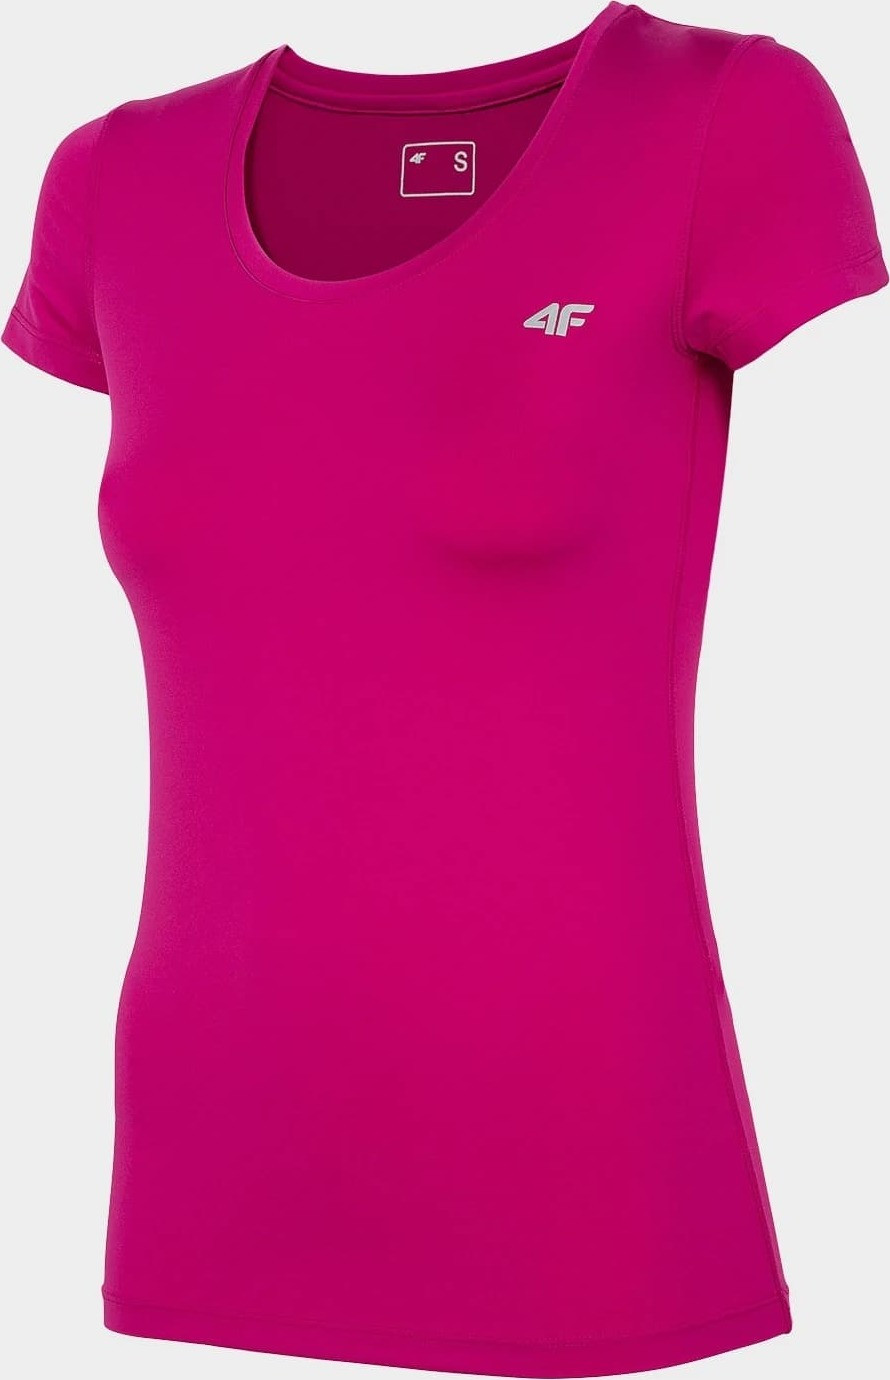 Dámské tričko 4F TSDF002 Růžové pink solid S